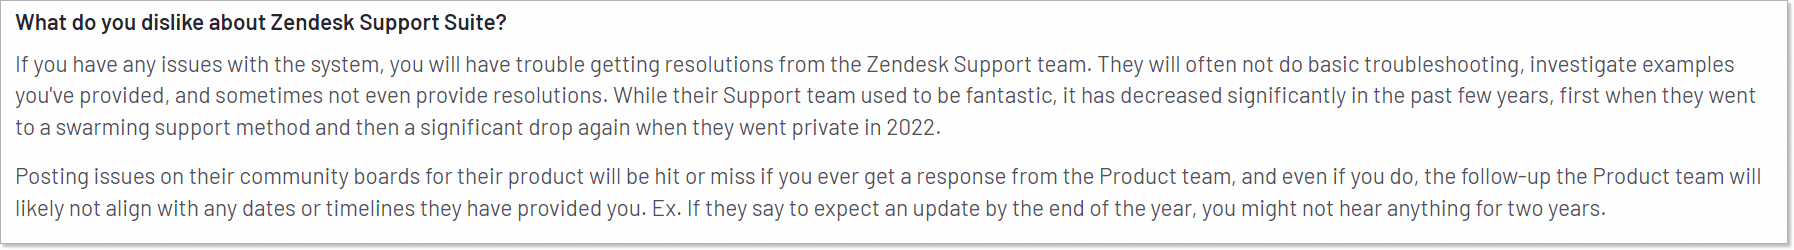 негативный отзыв про Zendesk